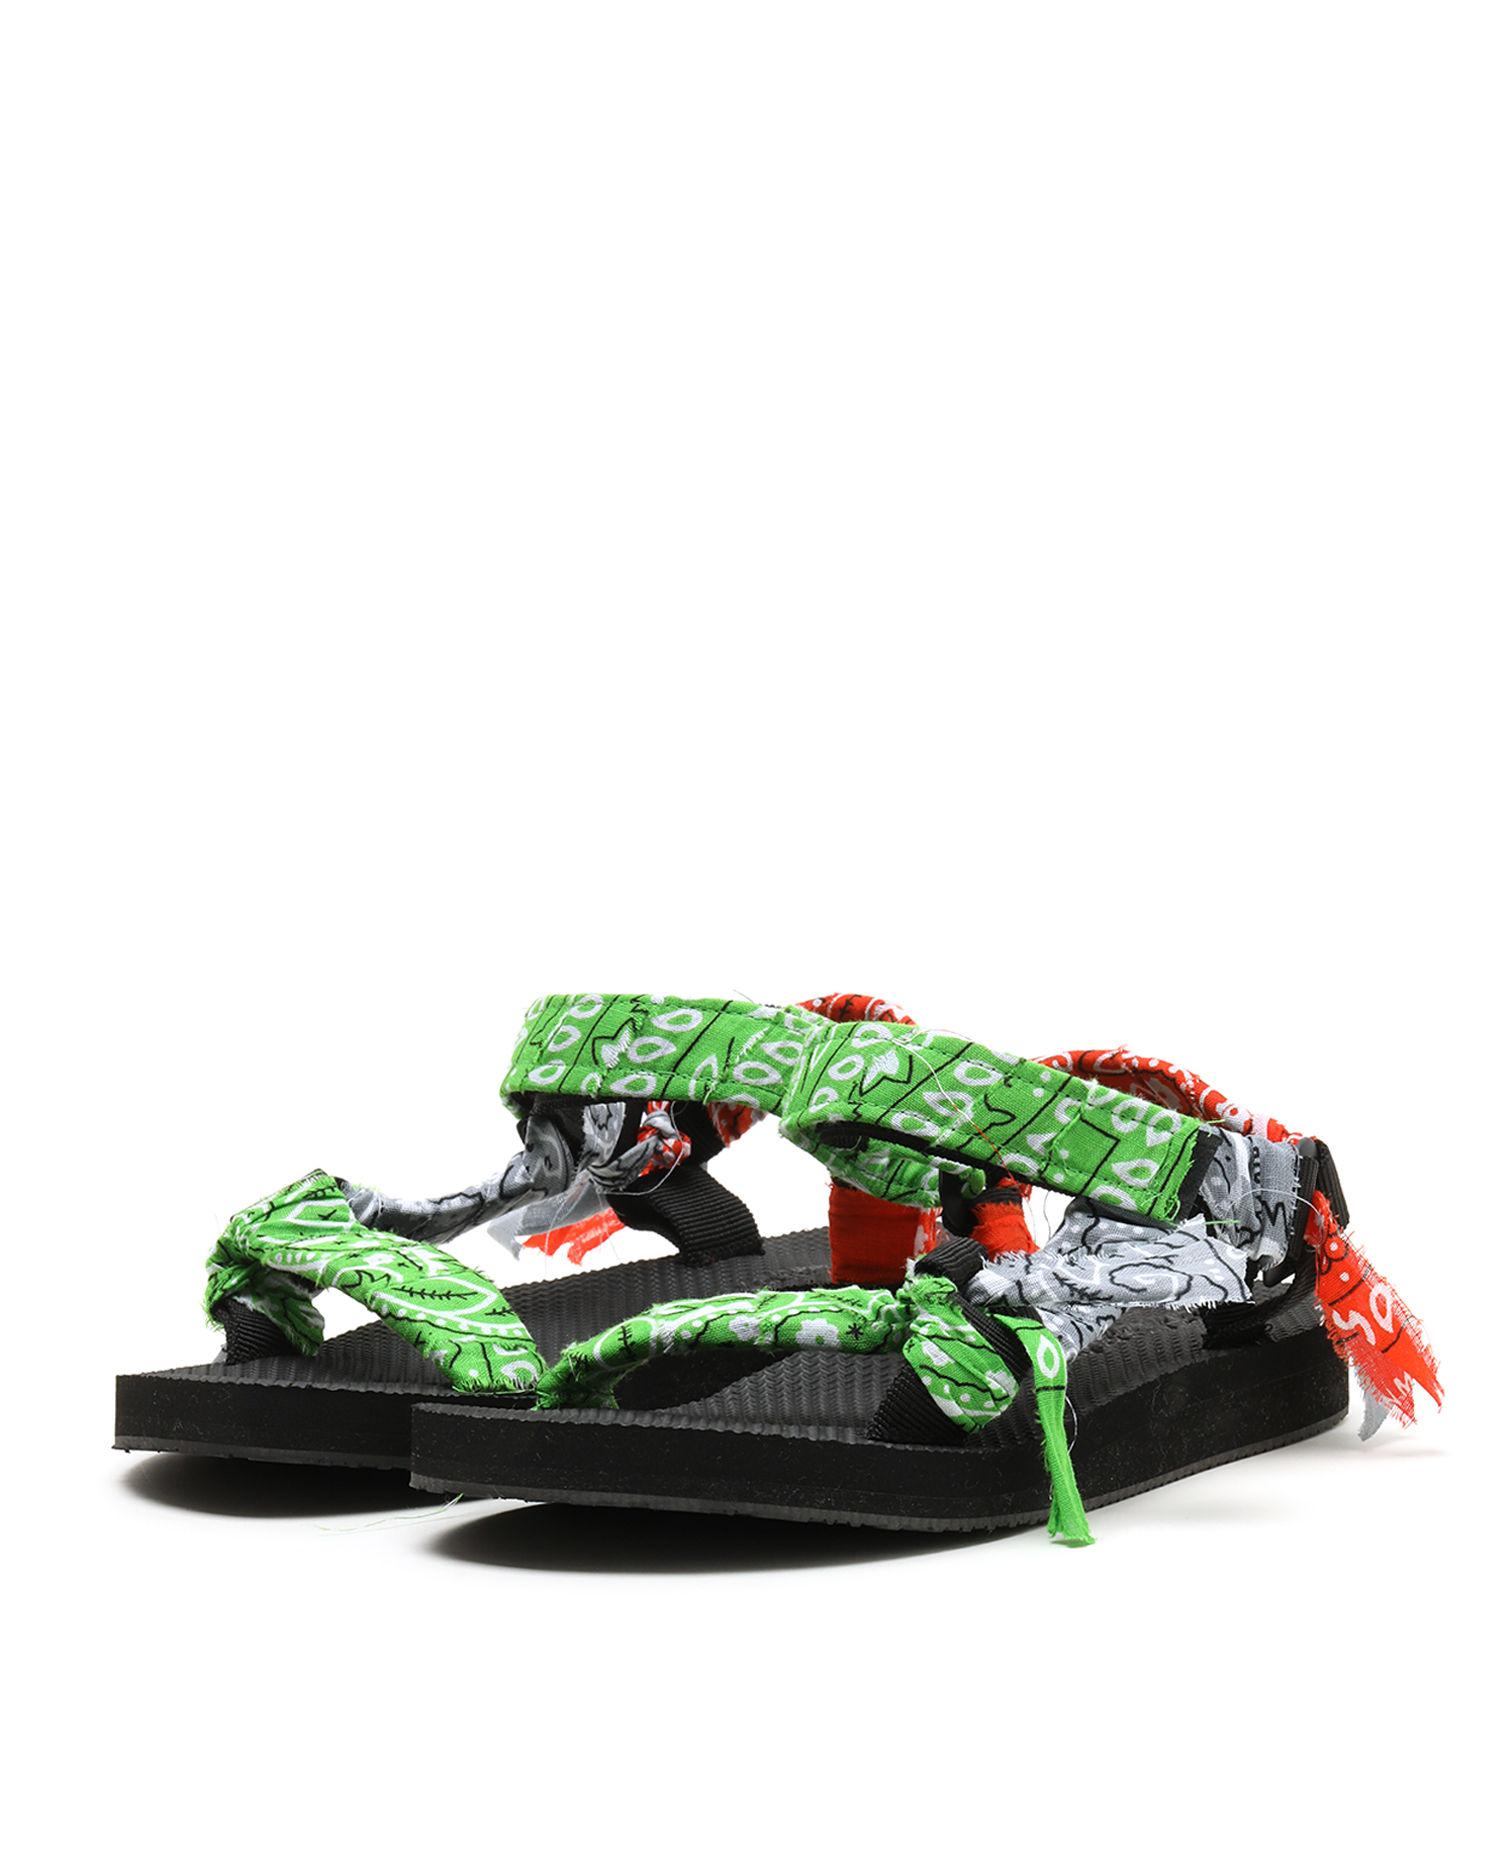 Trekky bandana-wrap sandals by ARIZONA LOVE